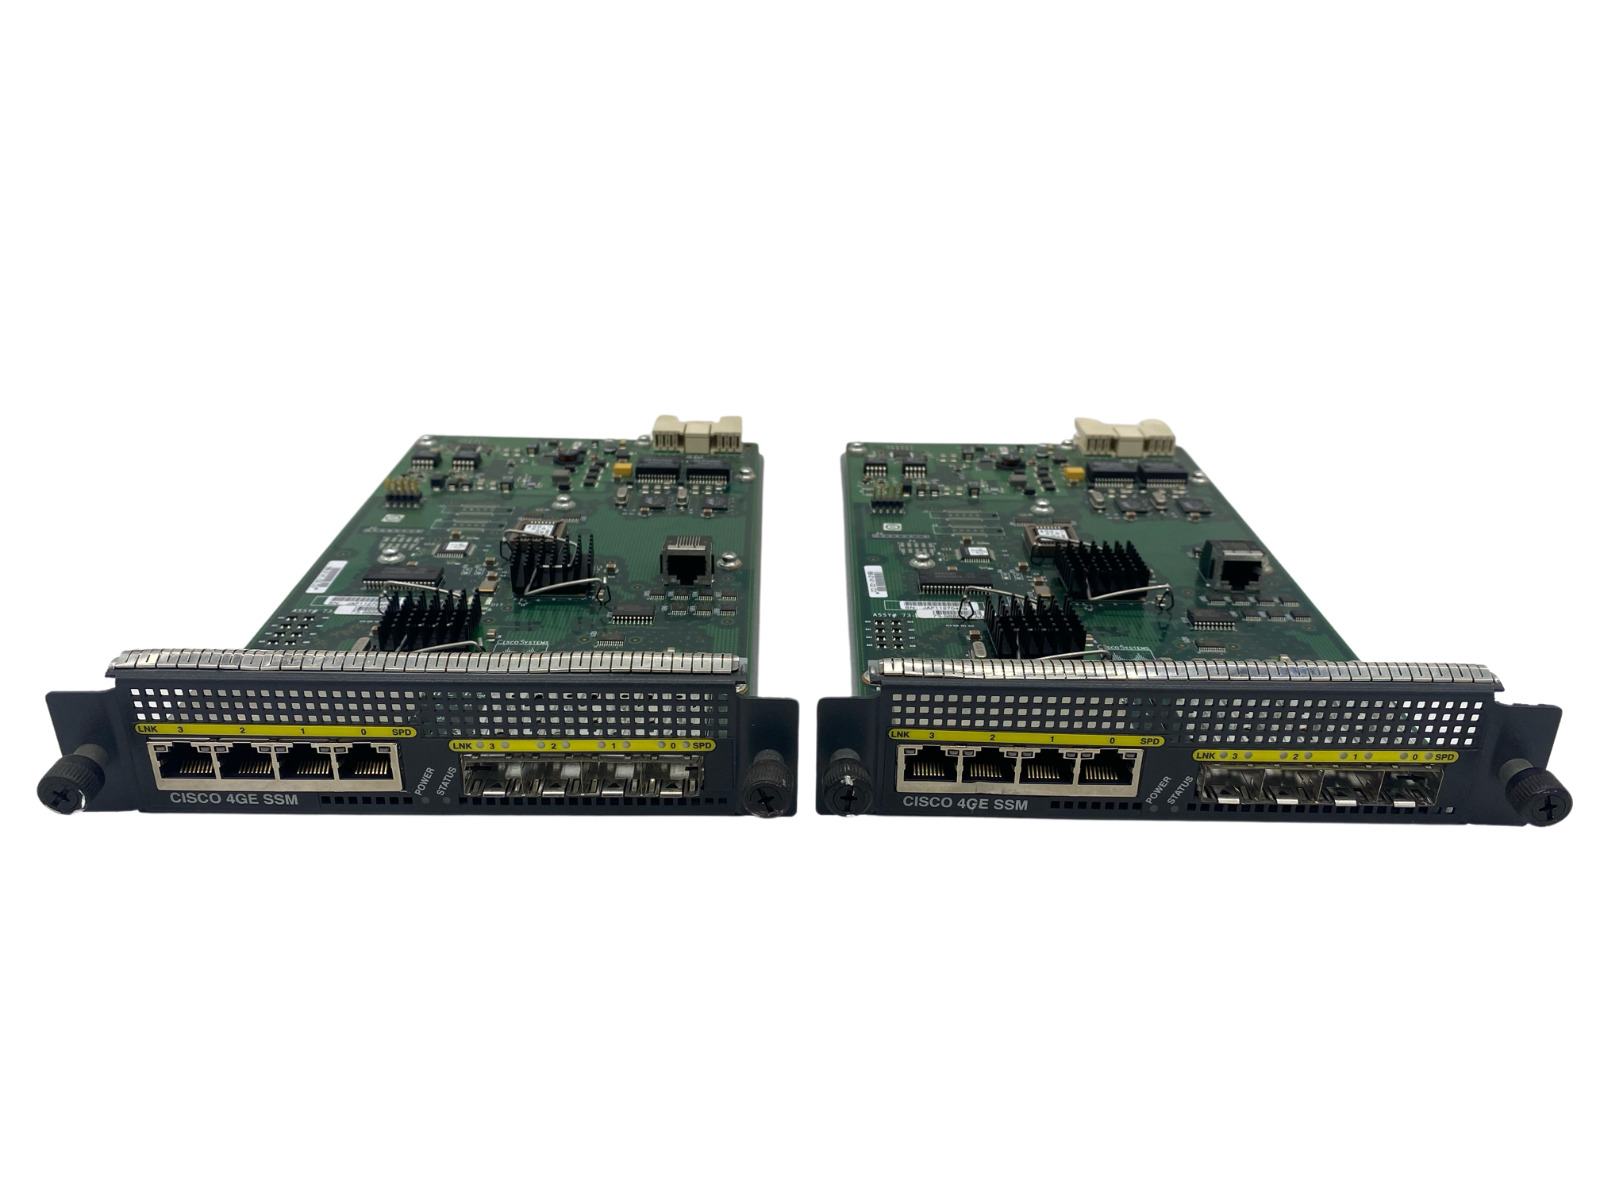 Lot of 2 Cisco SSM-4GE 8-Port SFP/RJ45 Gigabit Security Services Module ASA 5500